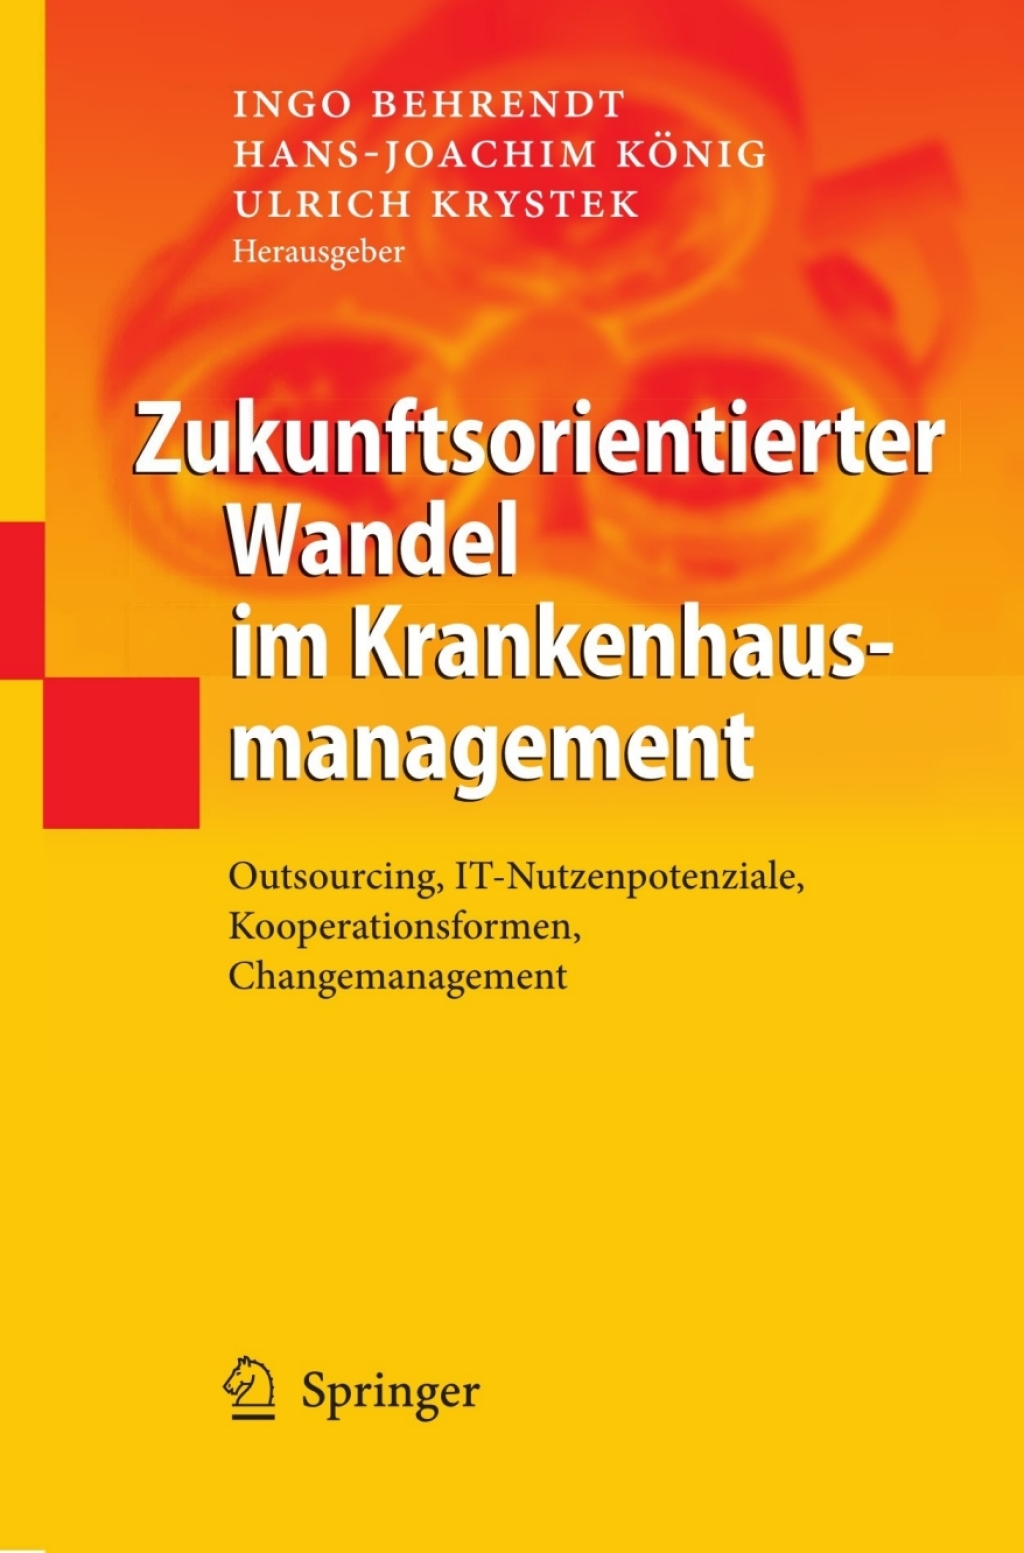 ISBN 9783642009341 product image for Zukunftsorientierter Wandel im Krankenhausmanagement - 1st Edition (eBook Rental | upcitemdb.com